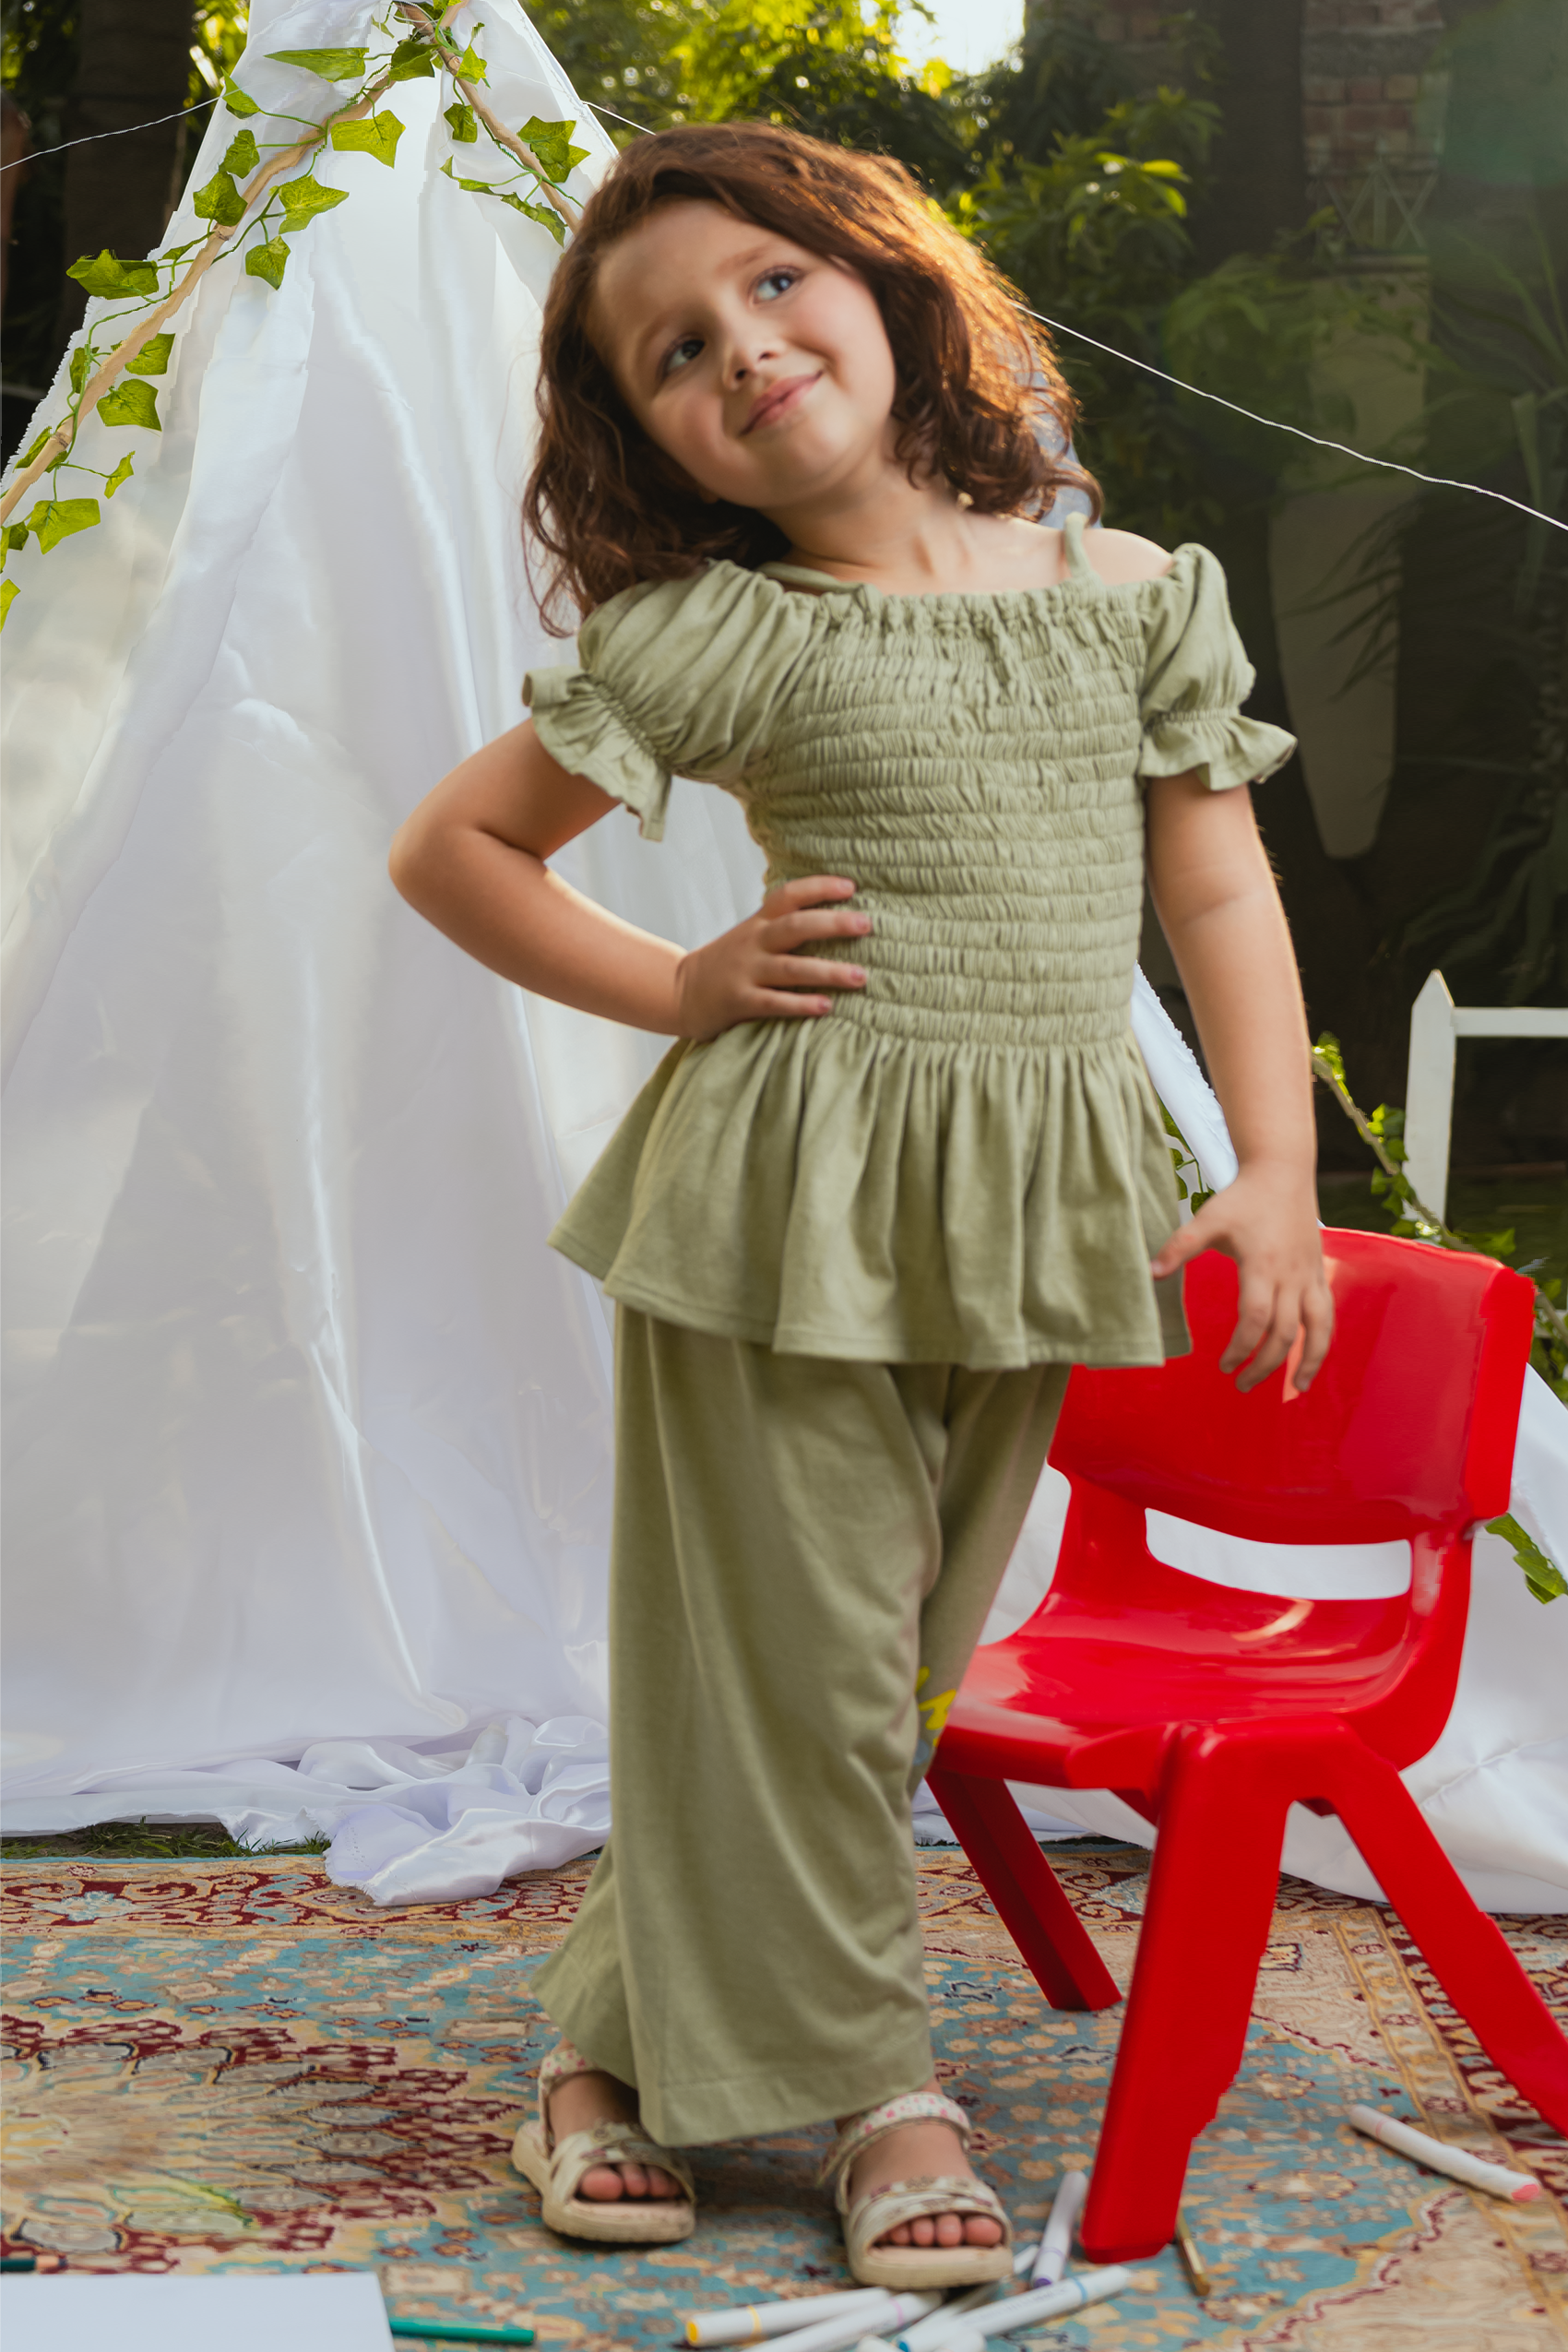 Cute Little Girl Clothes | Toddler Girl Easter Dresses 291468